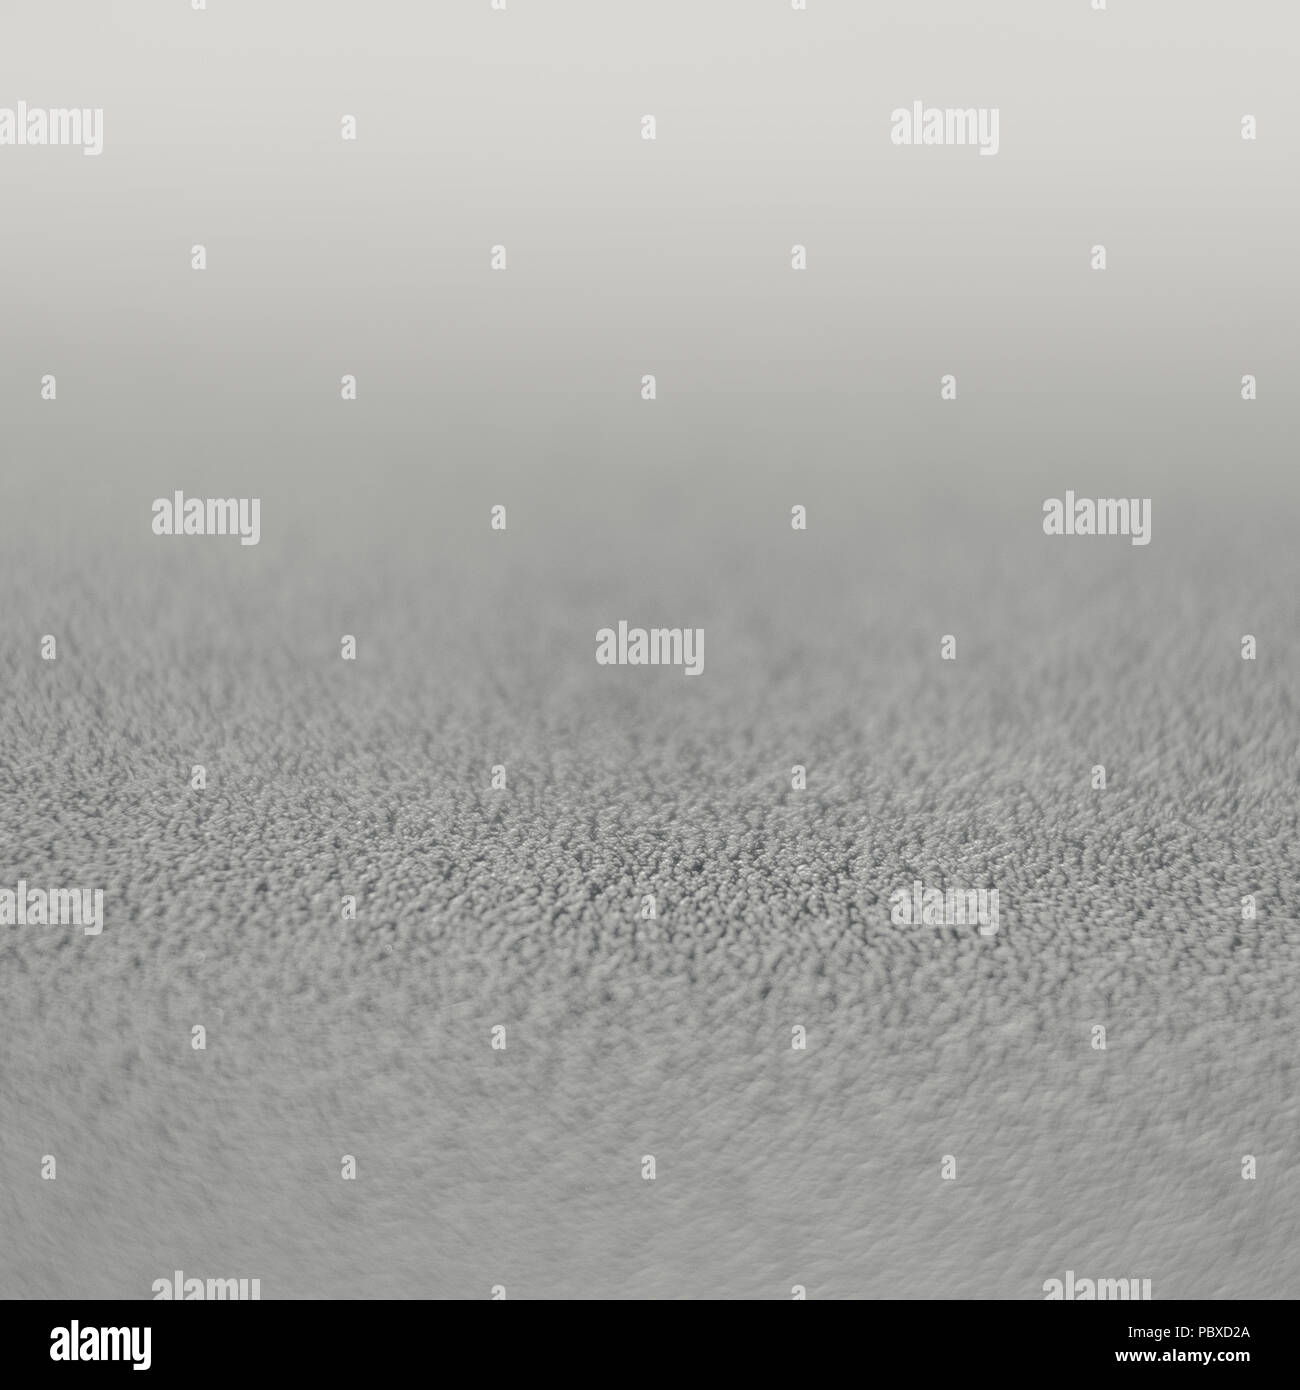 Grey elegant grainy abstract background Stock Photo